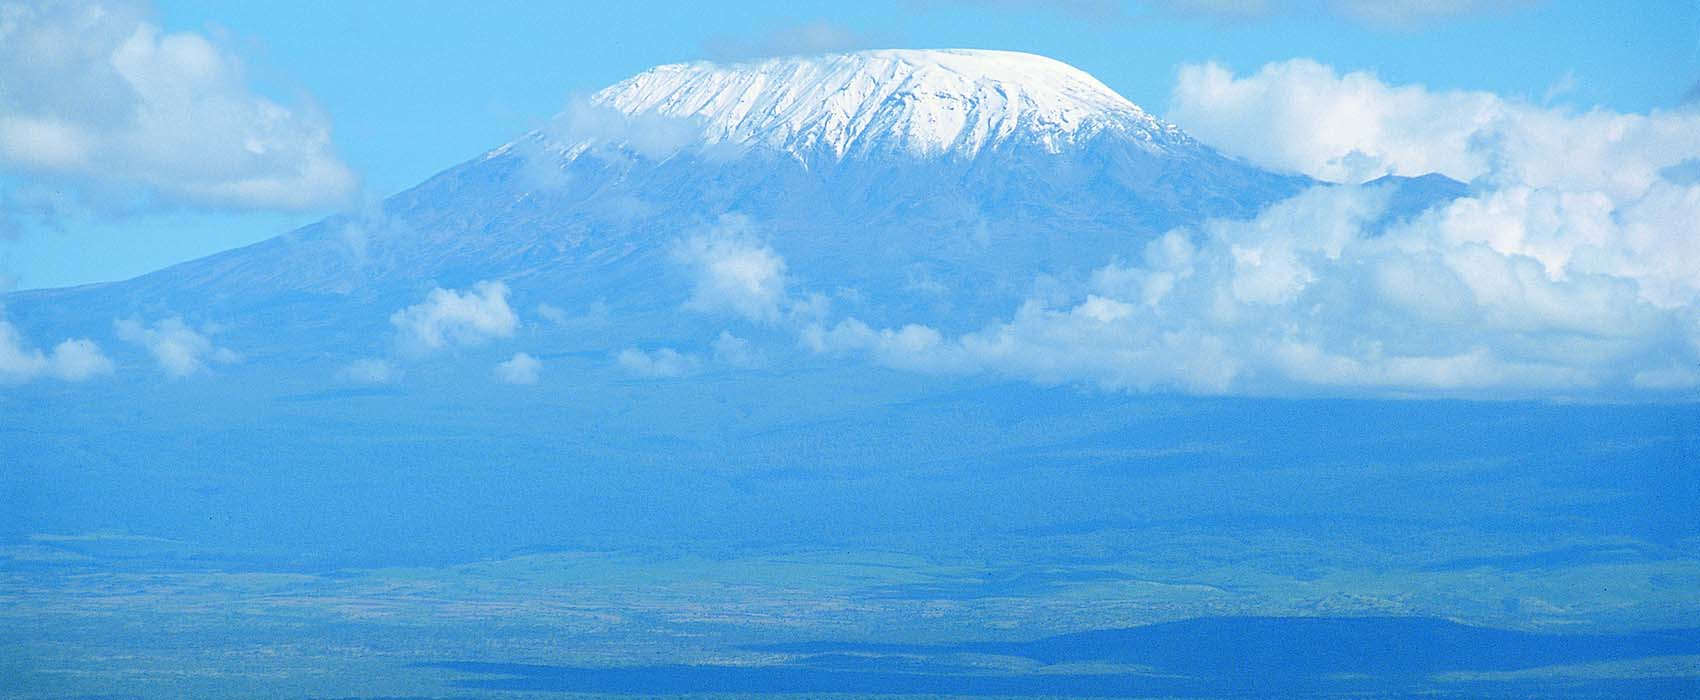 mt kilimanjaro climbs